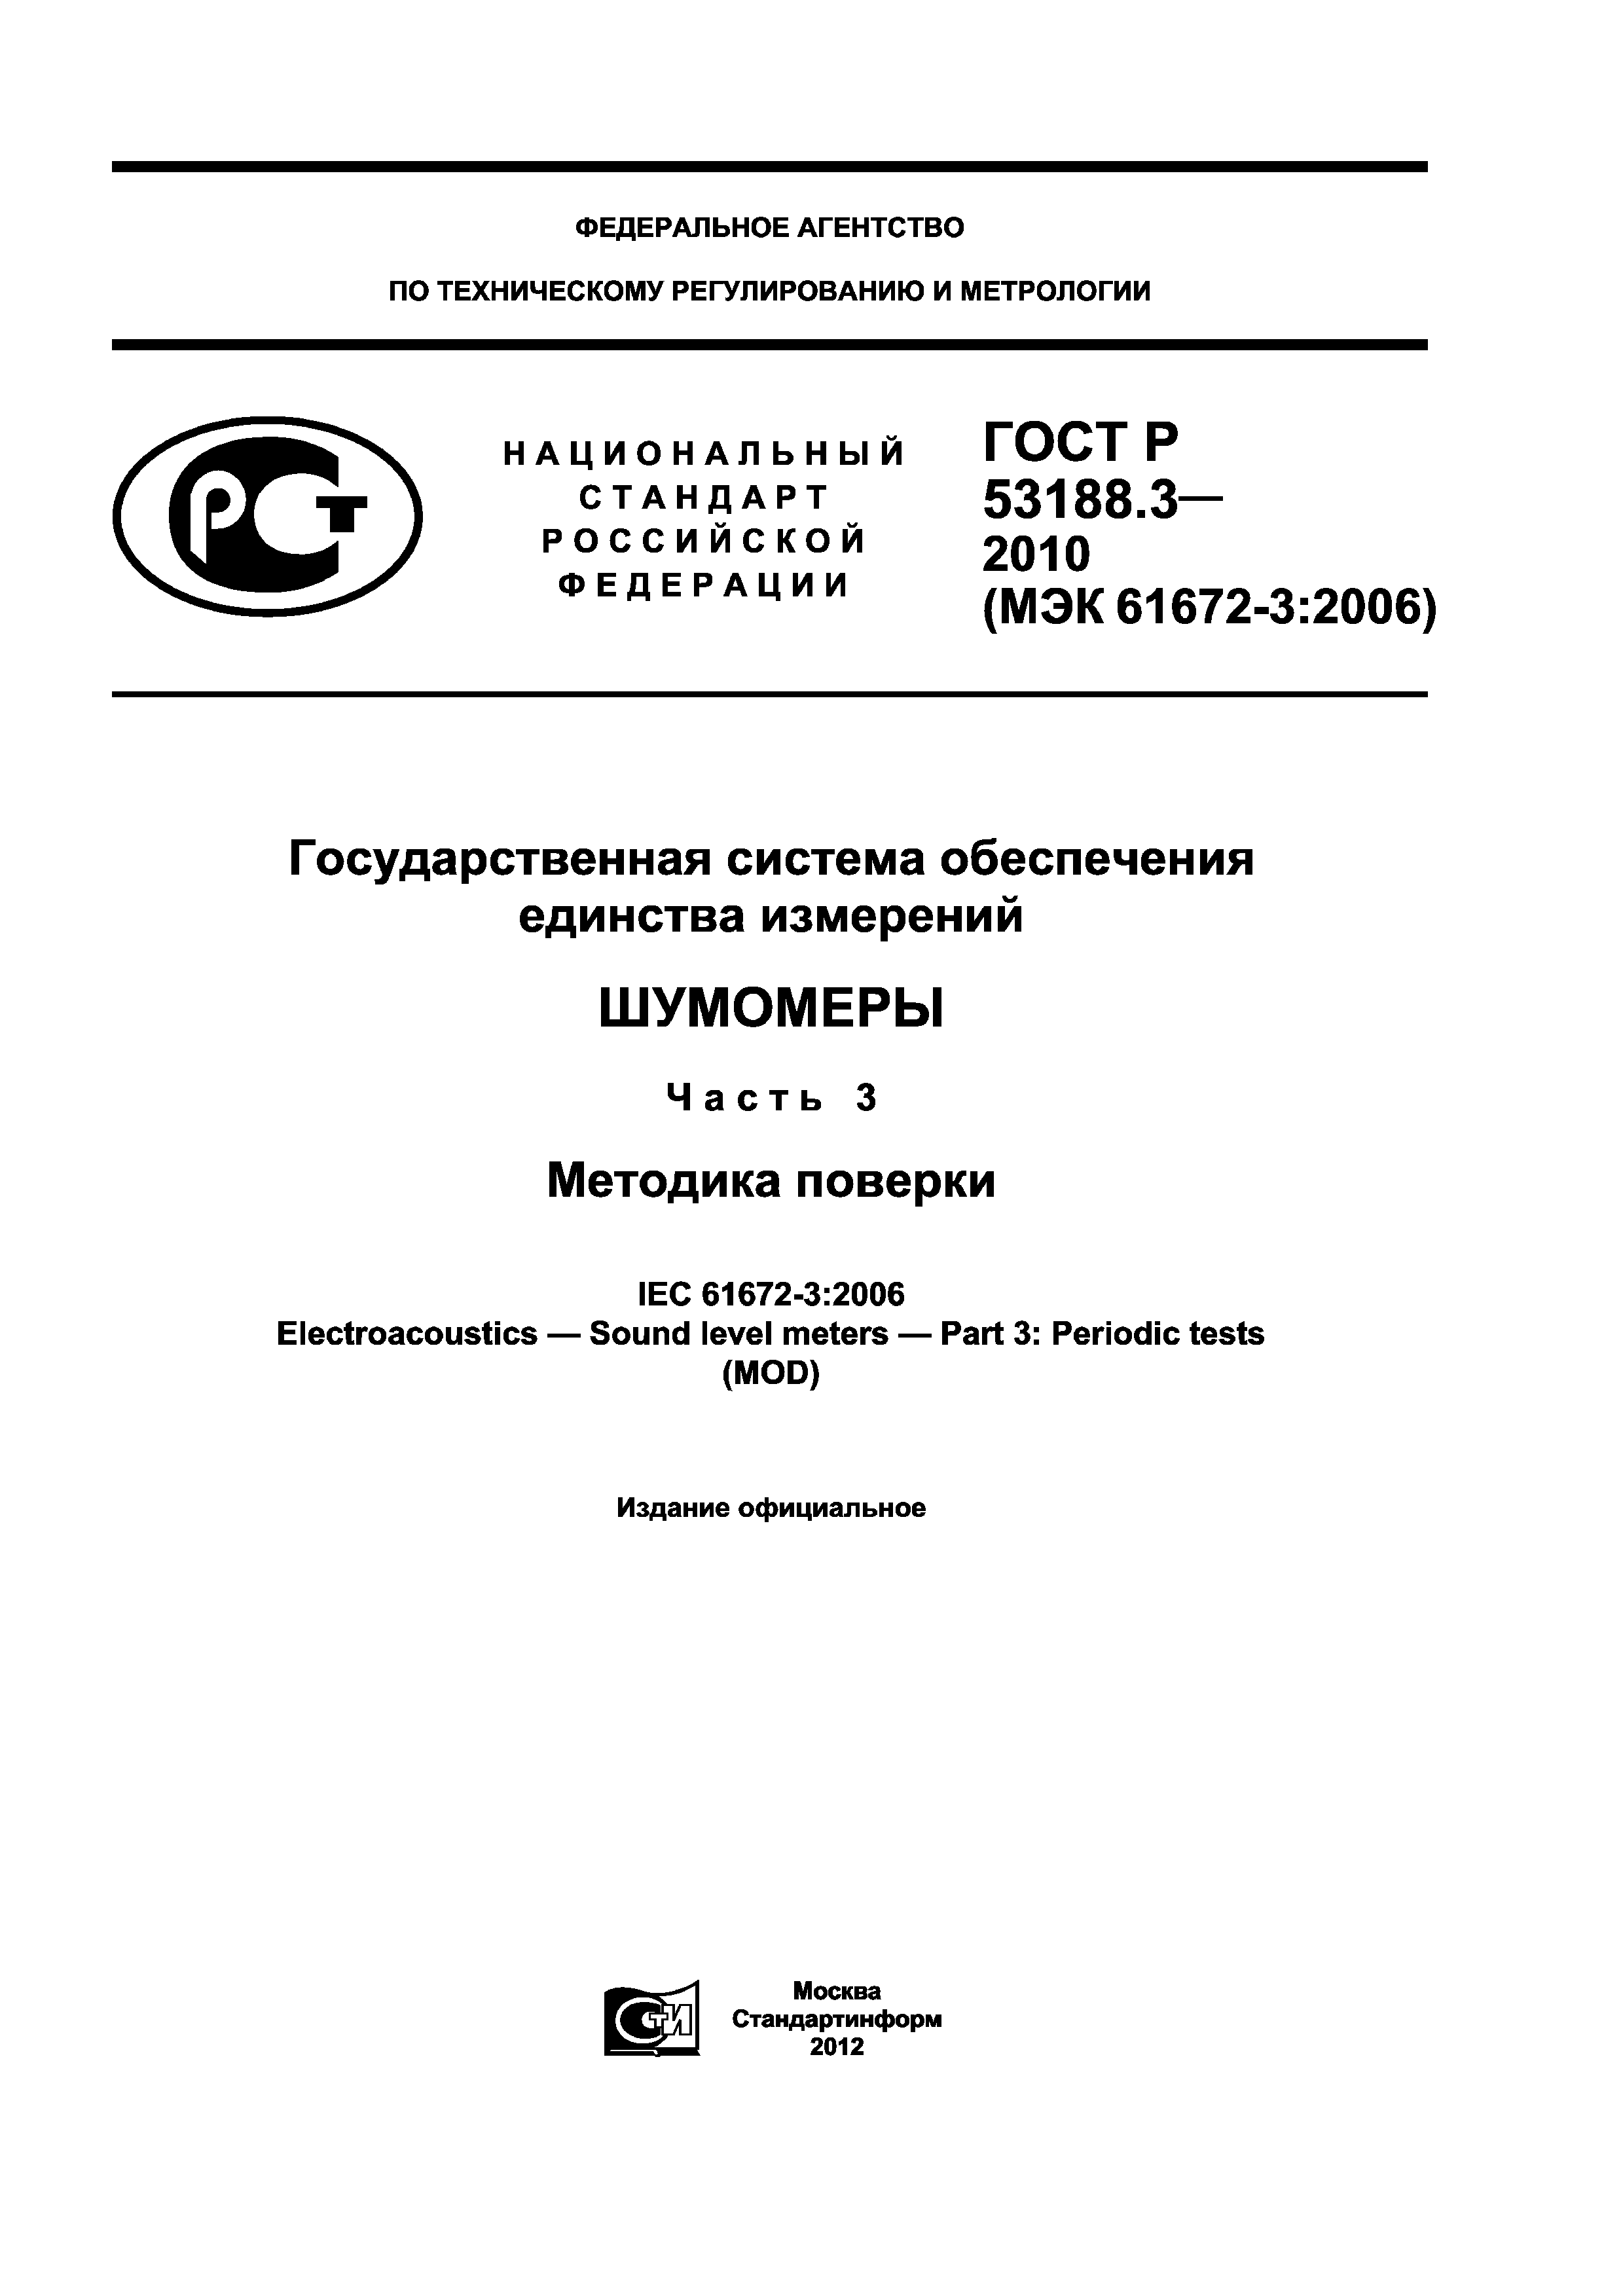 ГОСТ Р 53188.3-2010